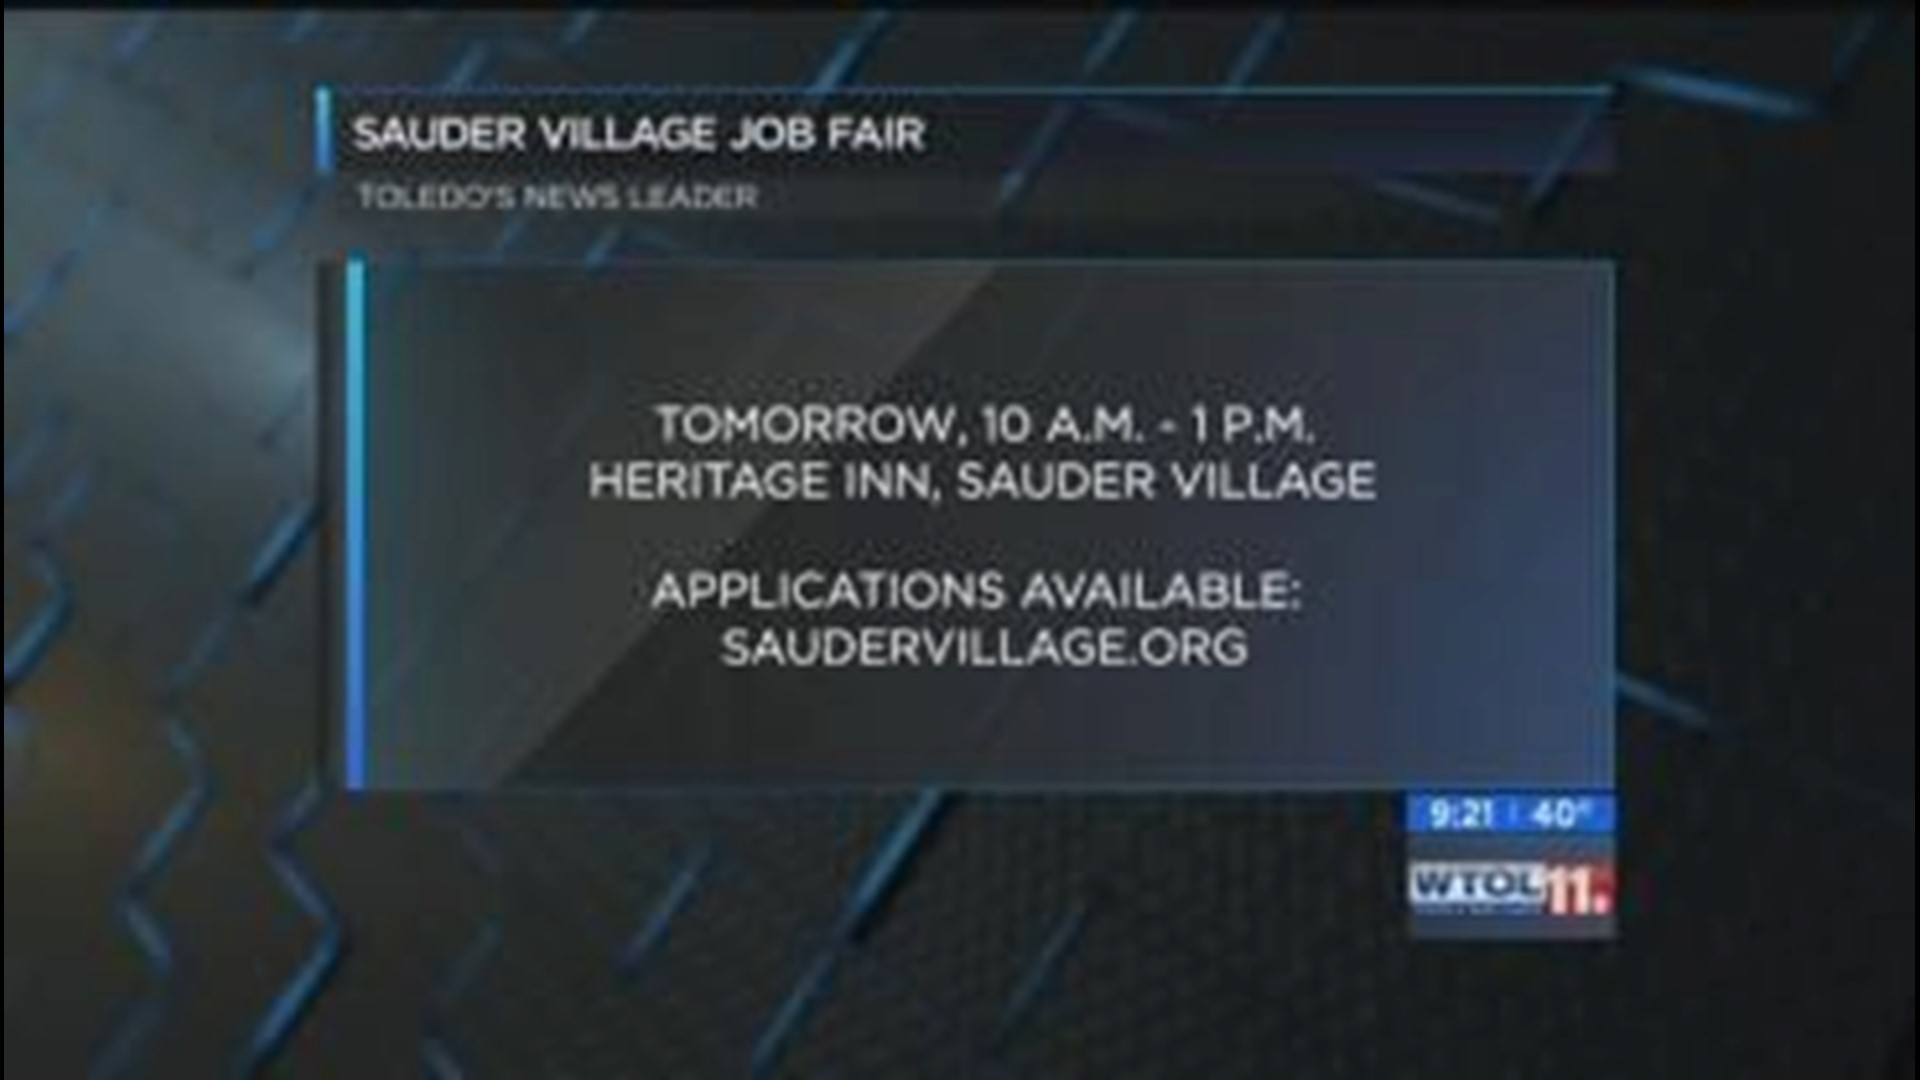 Sauder Village to hold weekend job fair